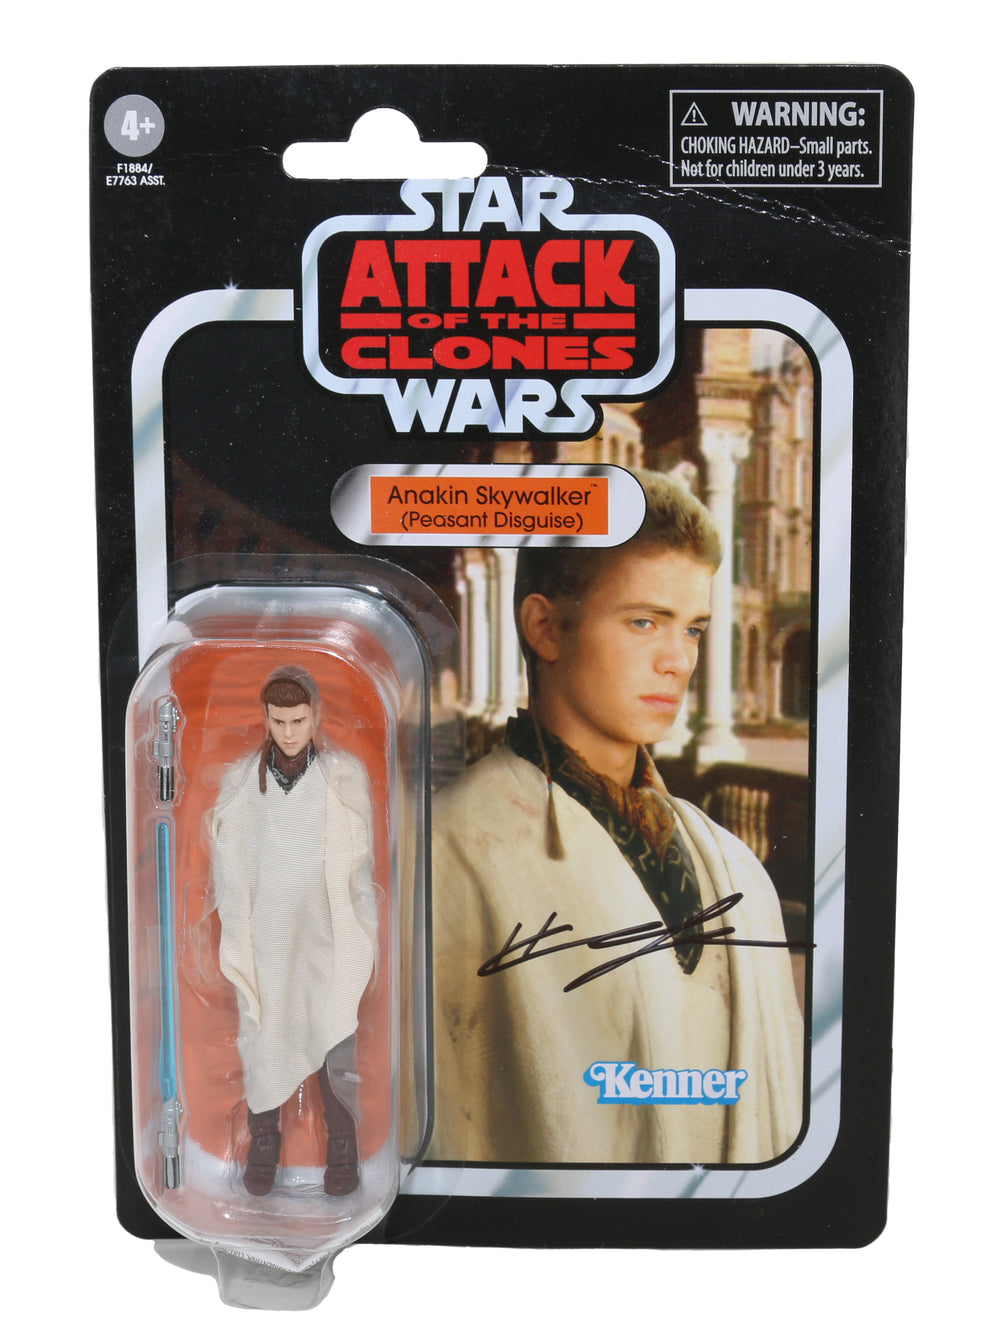 Hayden Christensen as Anakin Skywalker from Star Wars Episode II: Attack of the Clones (SWAU) Action Figure